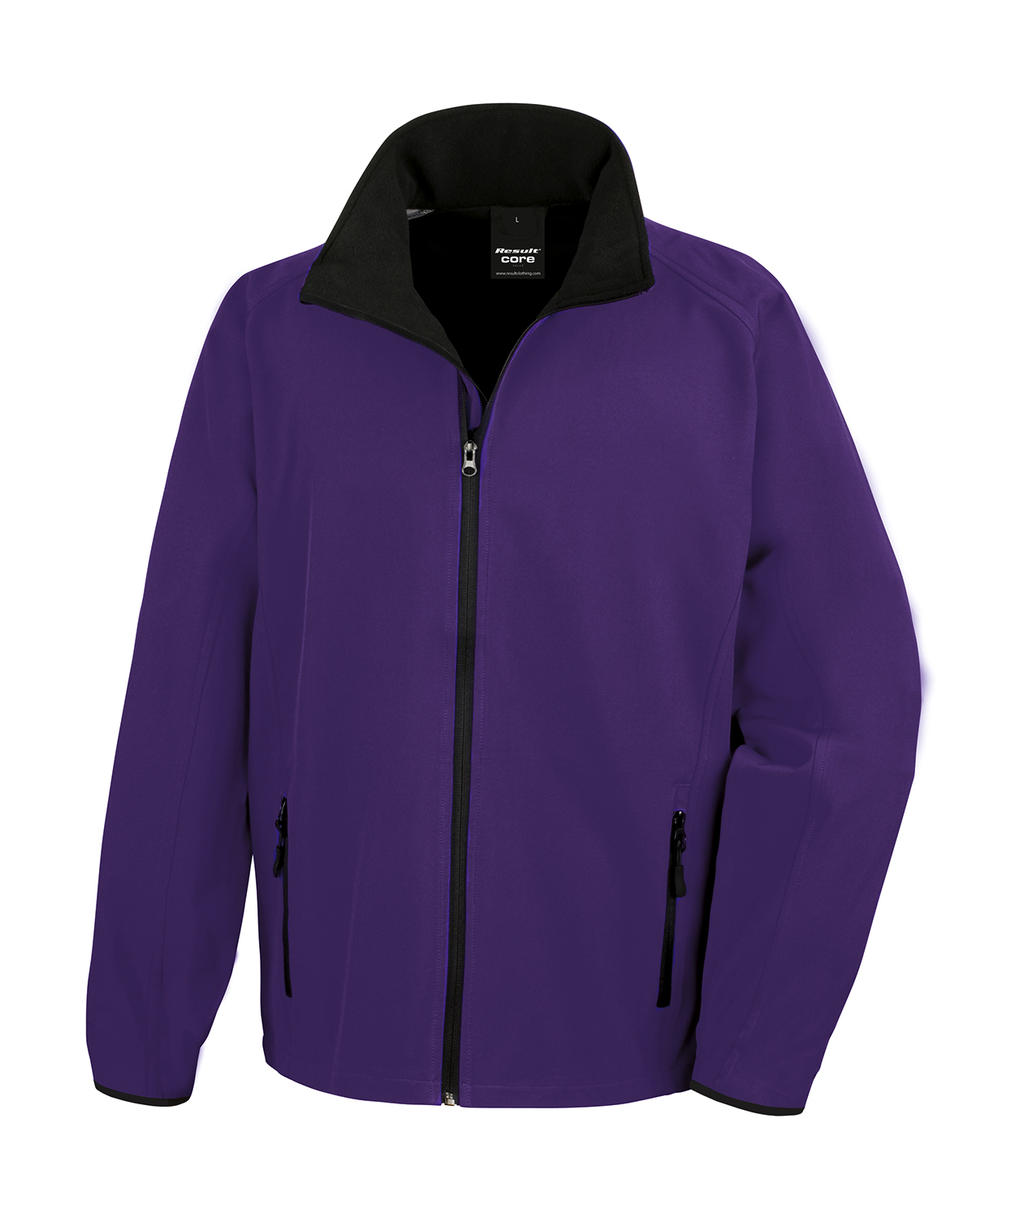  Printable Softshell Jacket in Farbe Purple/Black